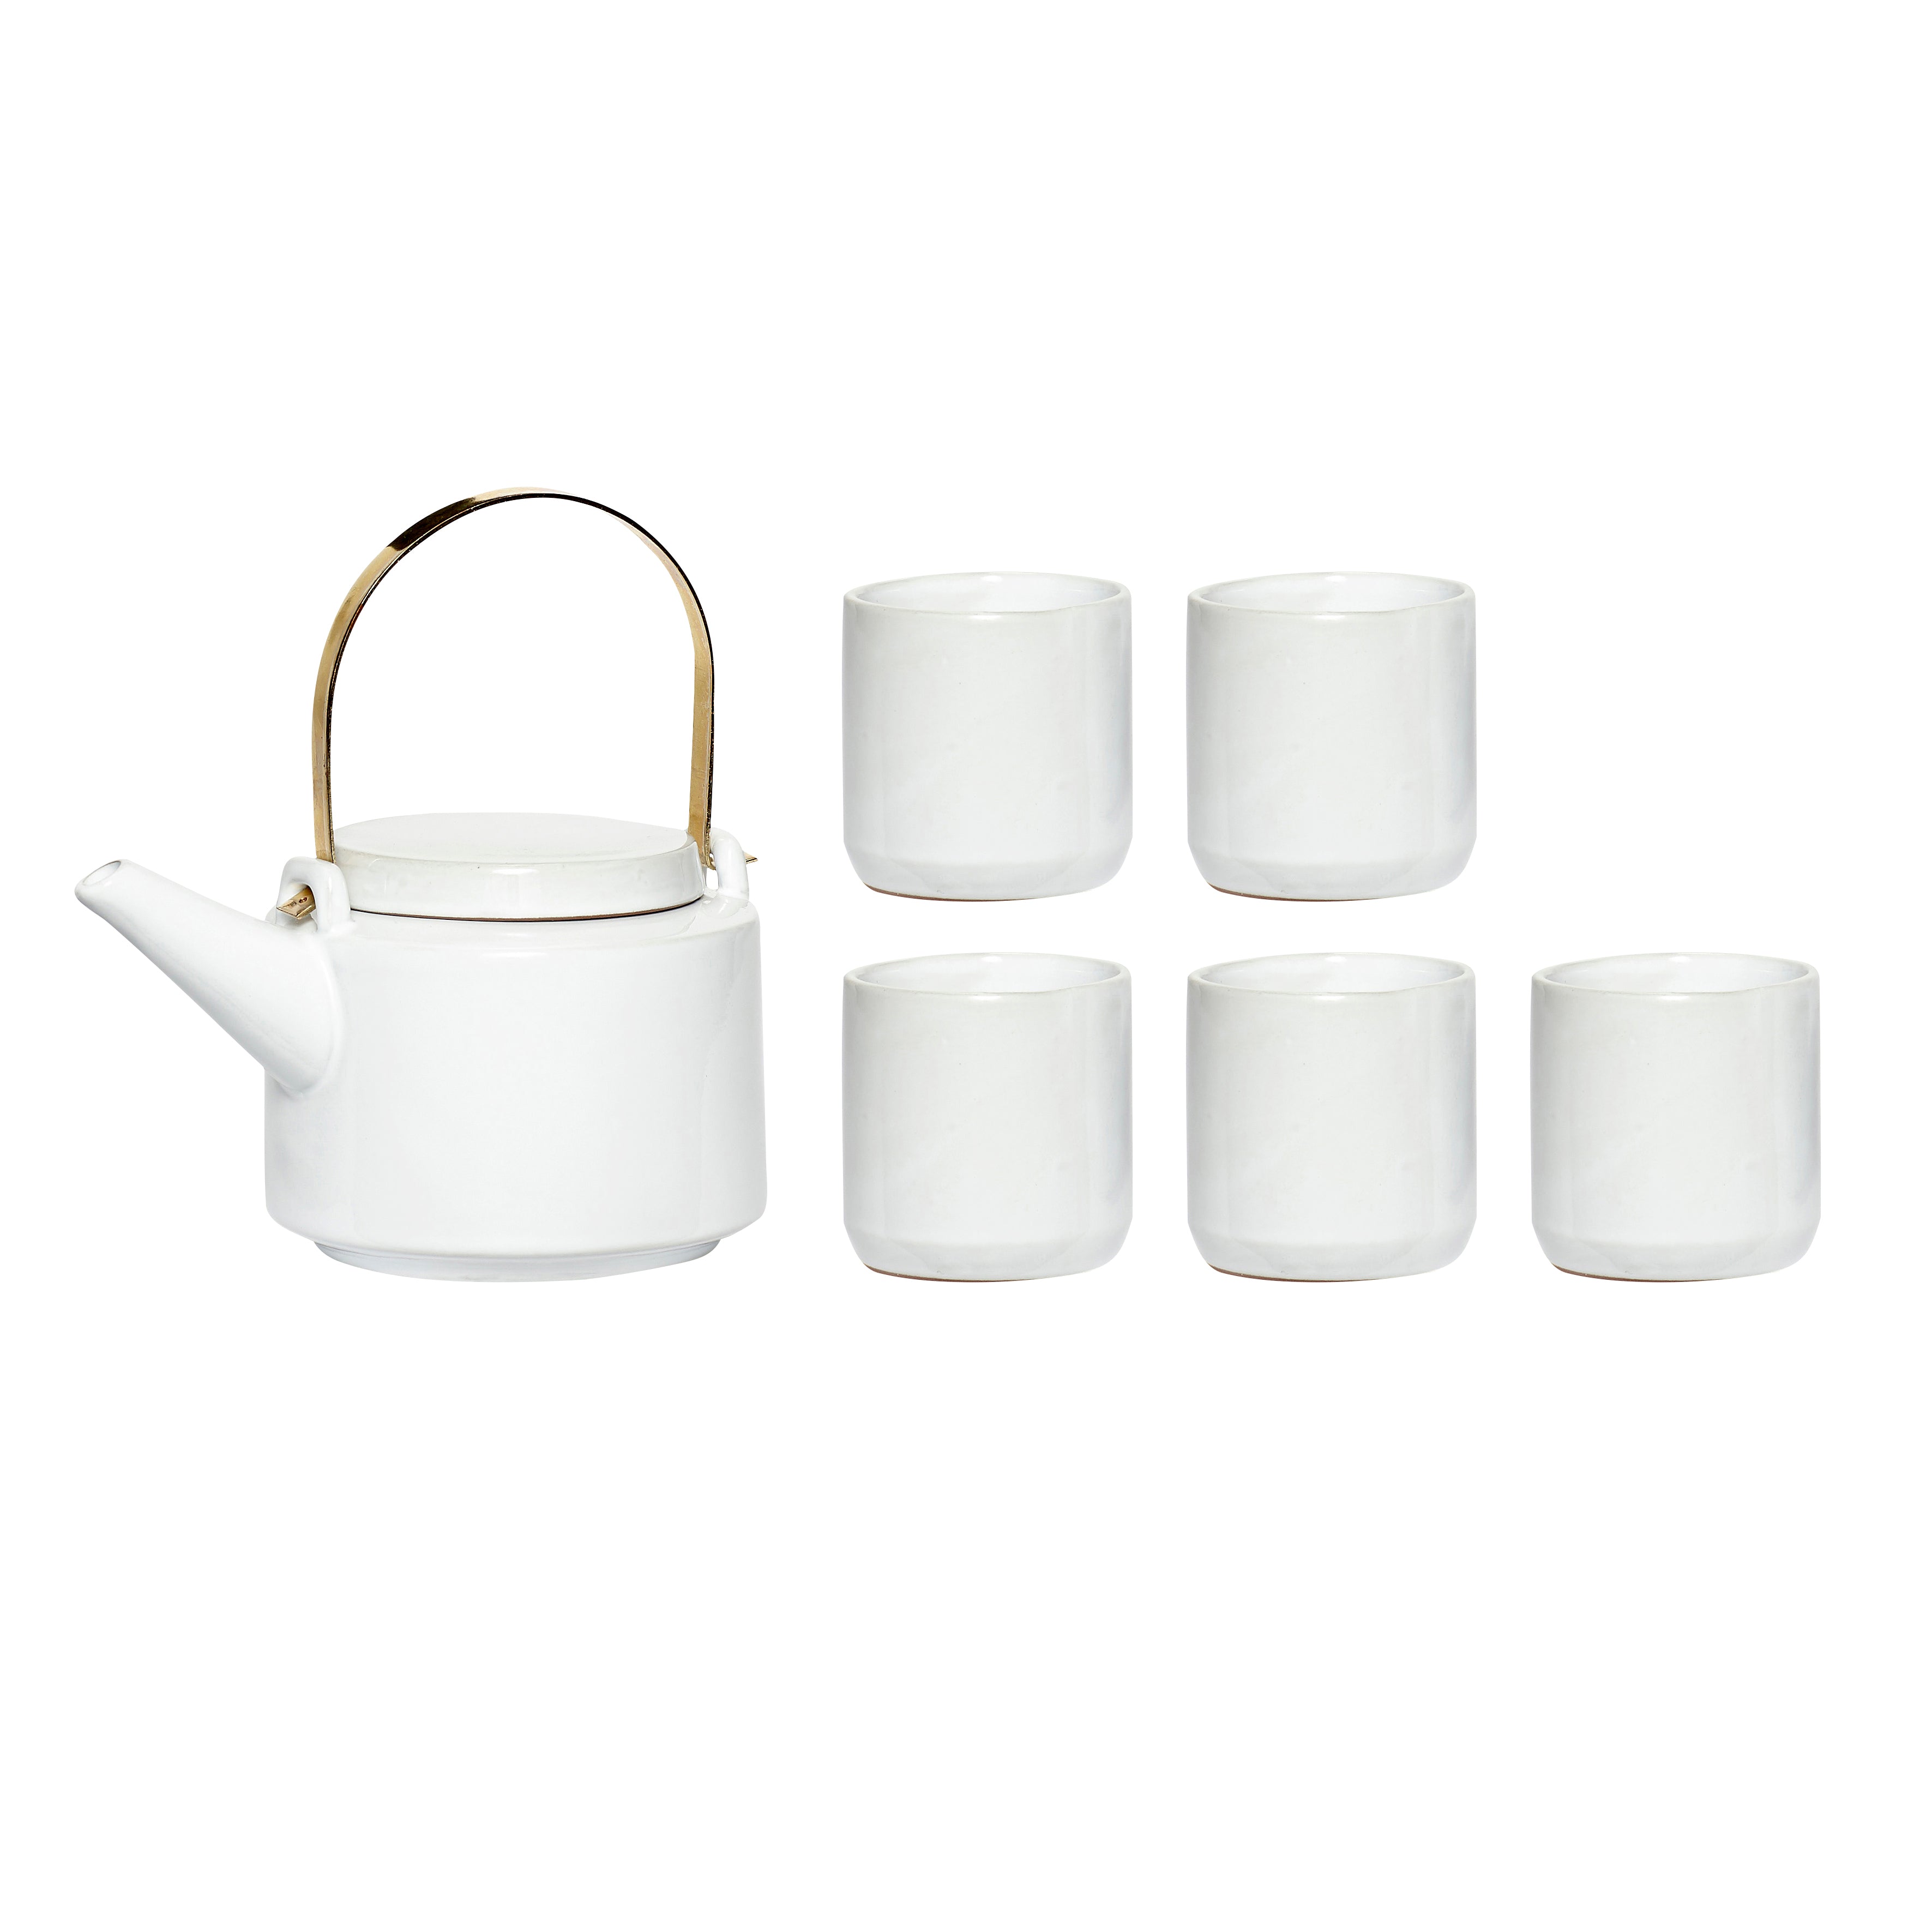 Tea Set with a Teapot and 5 Mugs